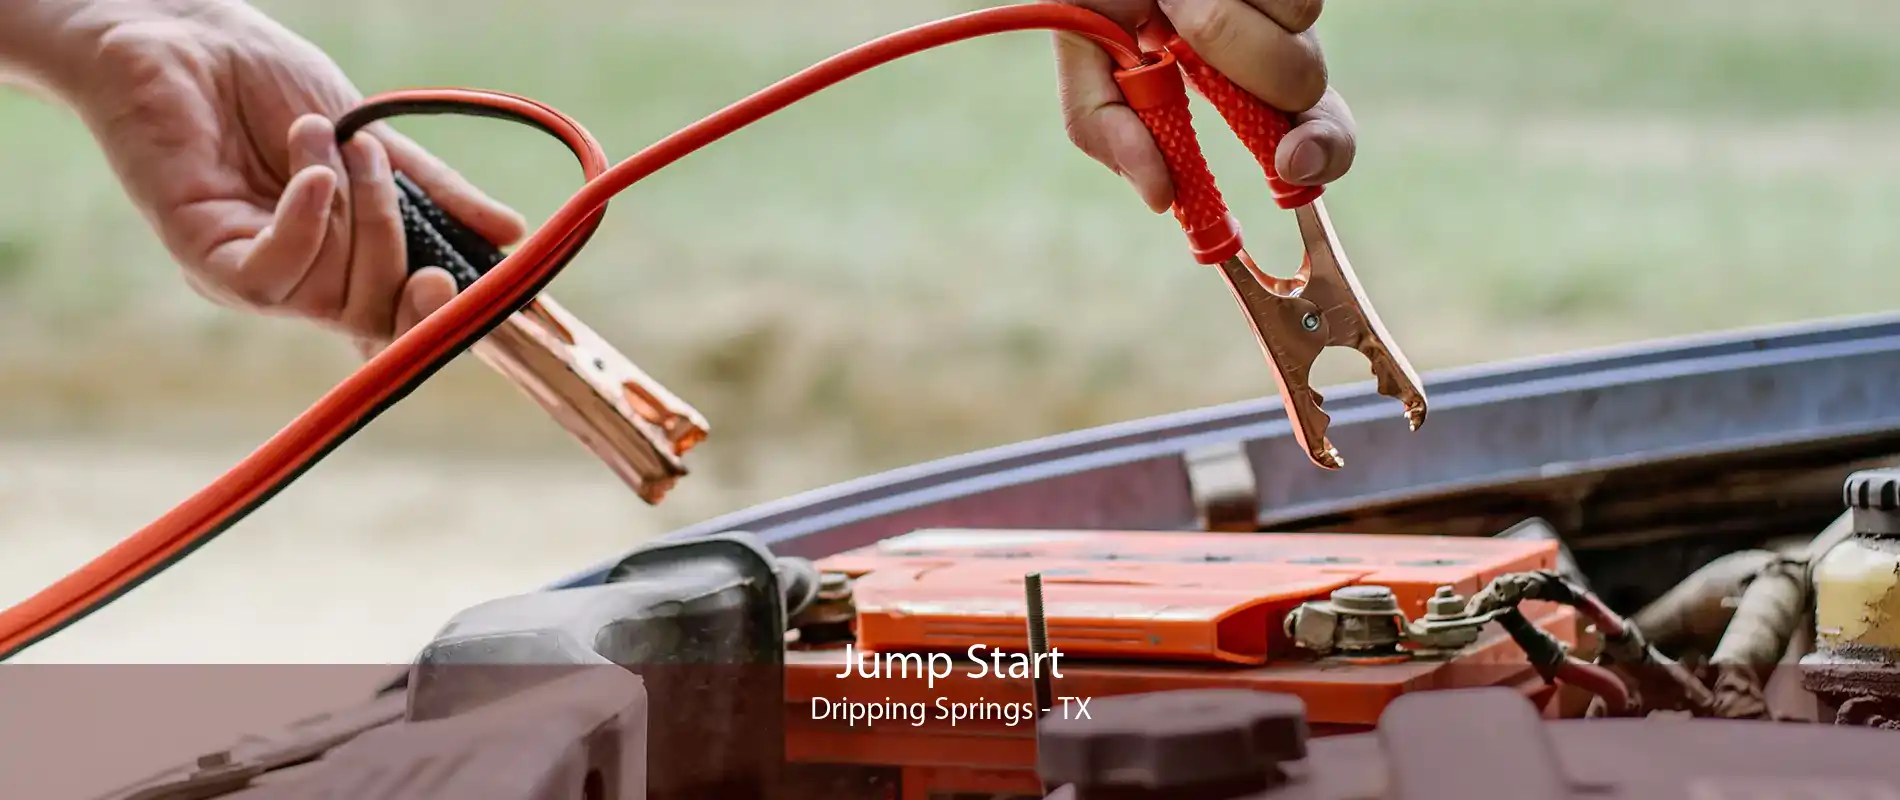 Jump Start Dripping Springs - TX